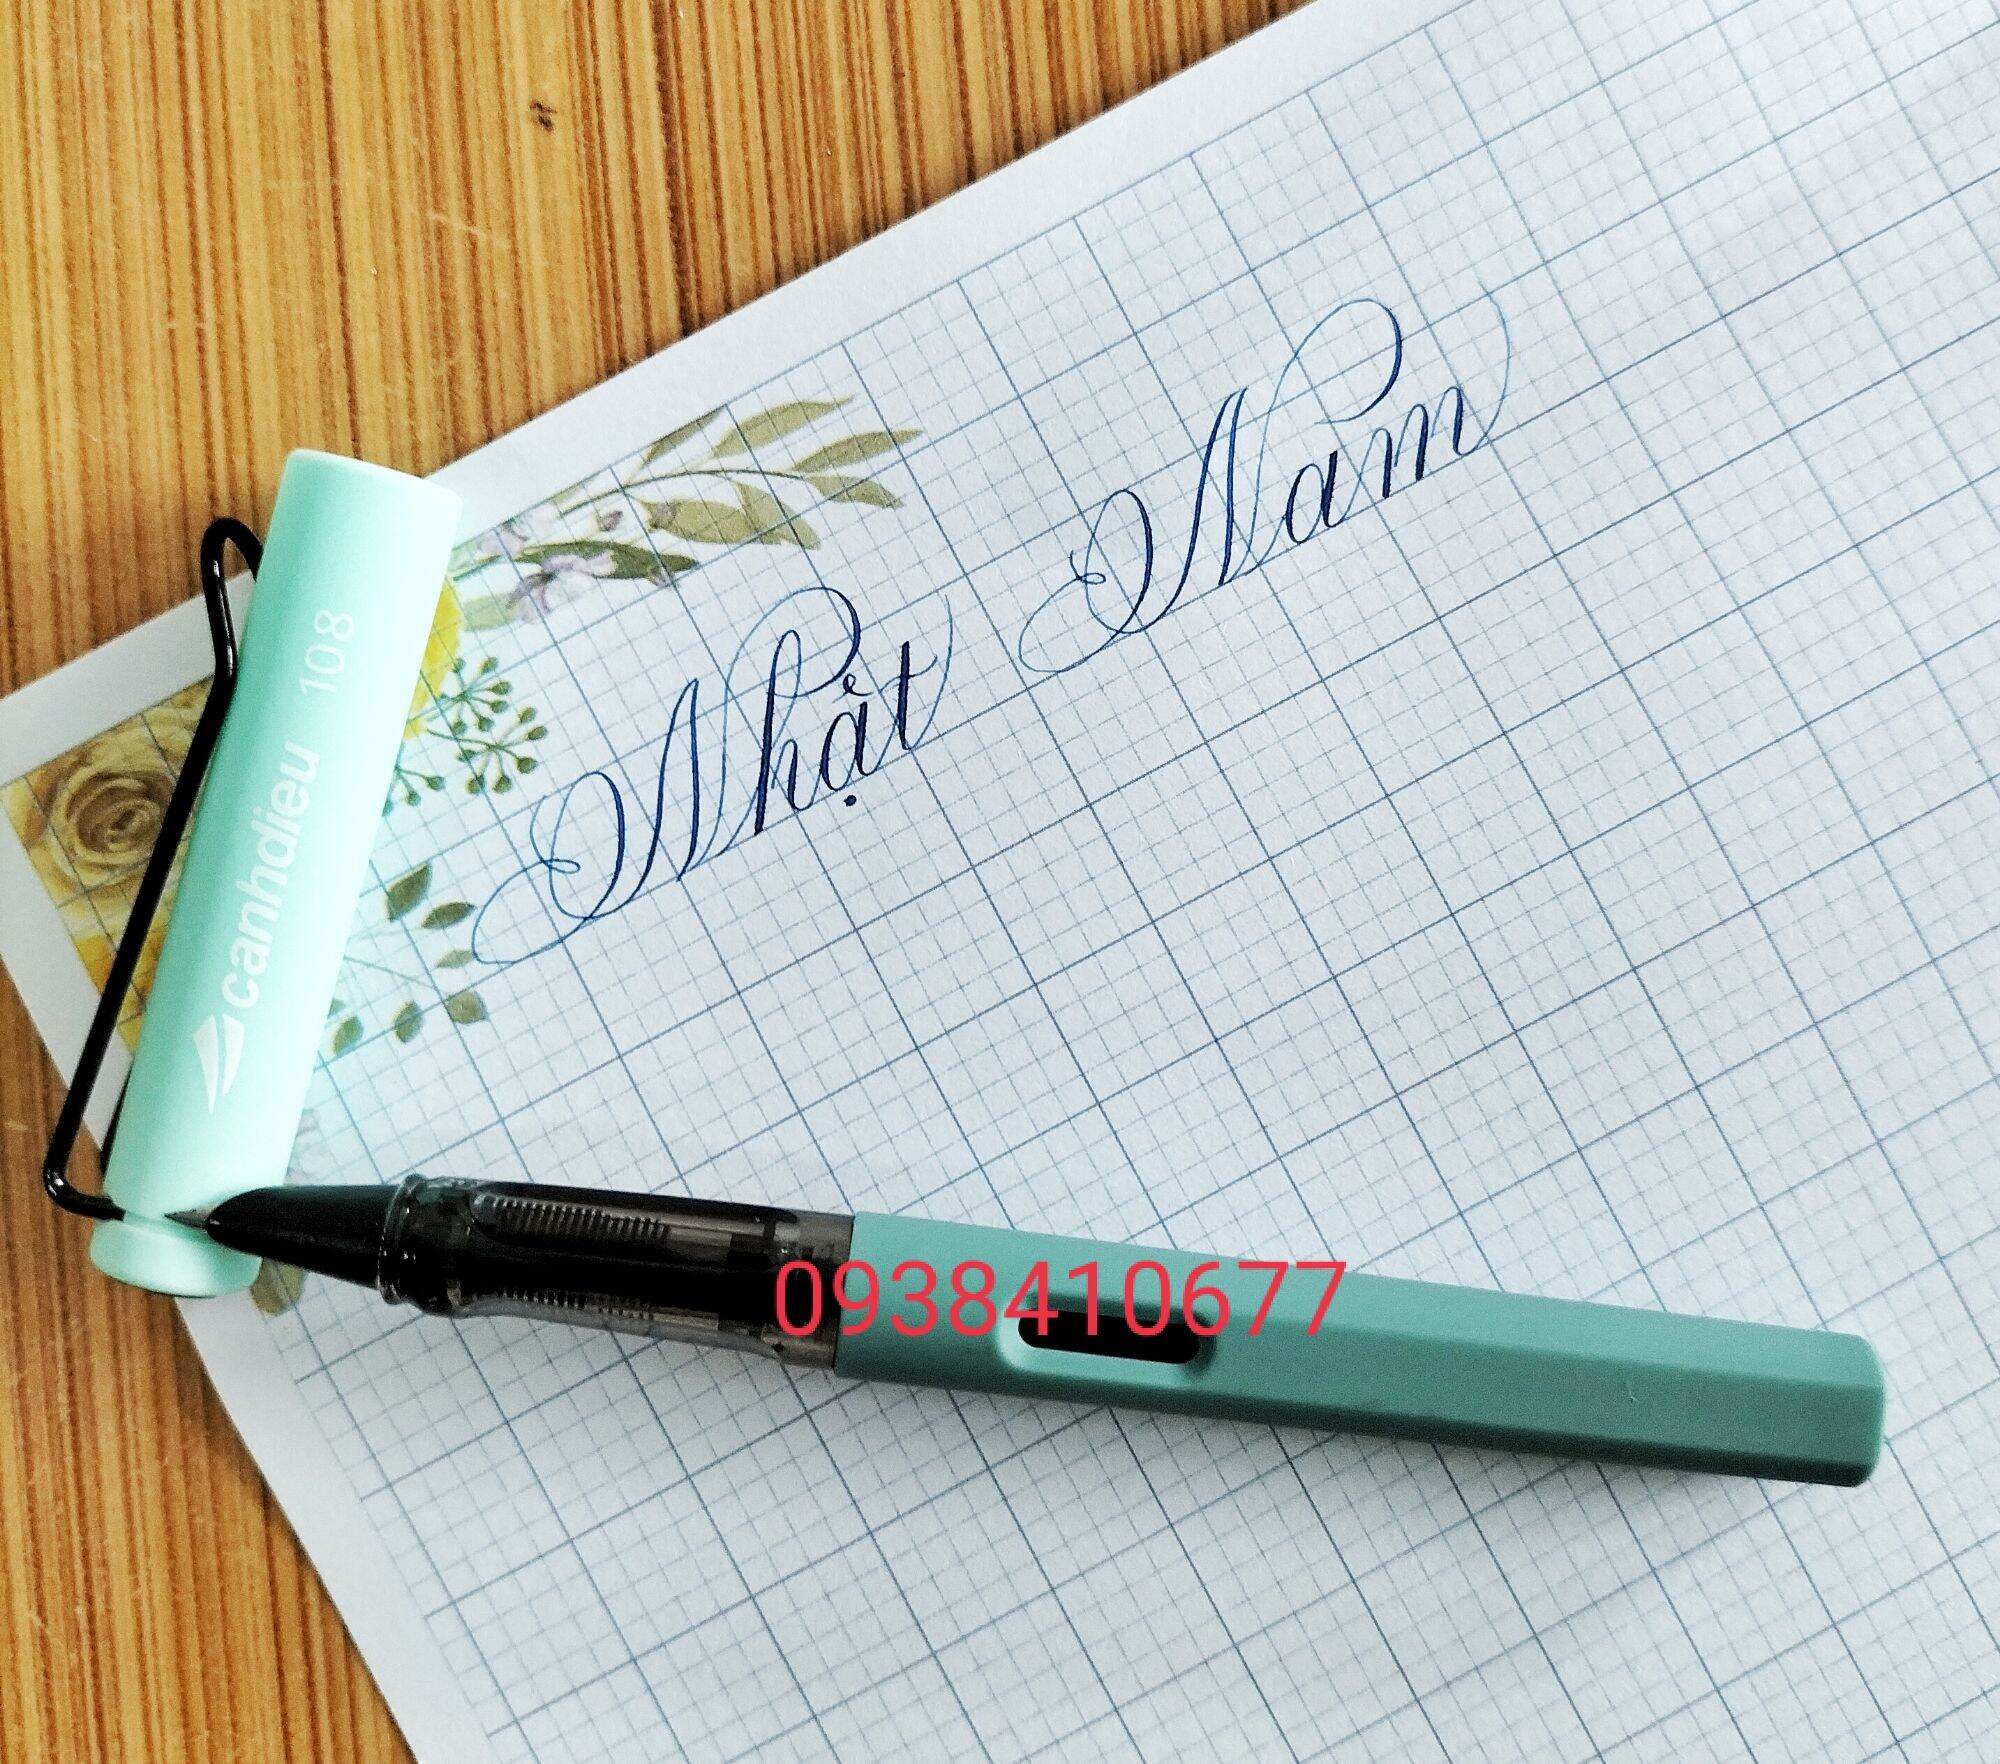 Bút máy cánh diều 108 ngòi lá tre bút nét thanh nét đậm - bút luyện chữ đẹp - bút máy - bút luyện calligraphy